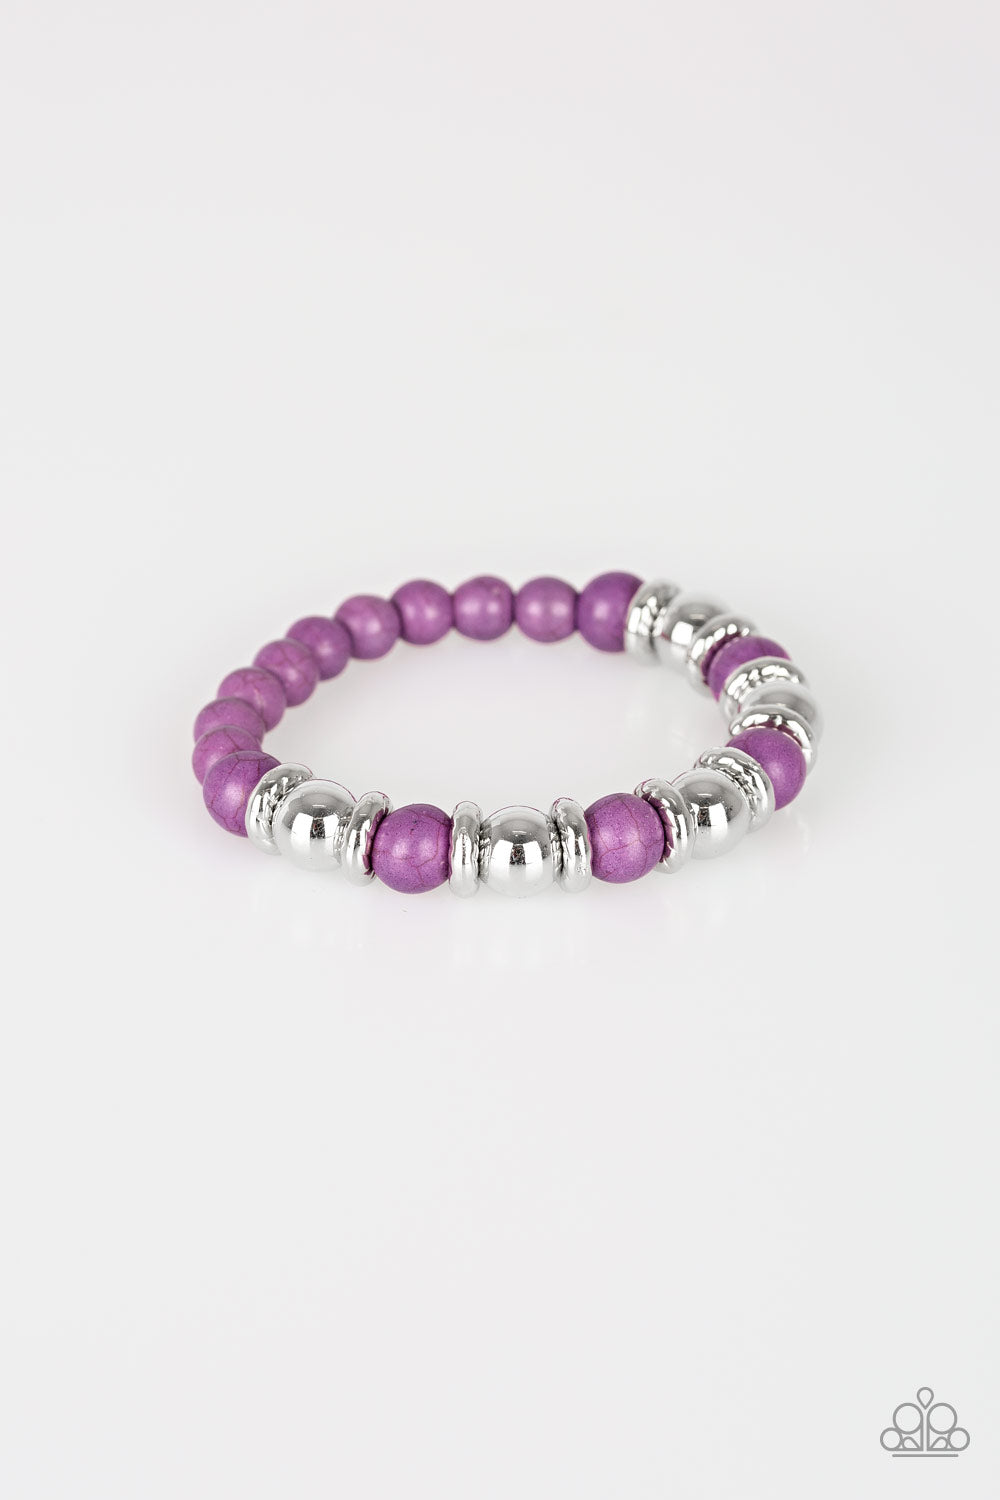 Paparazzi Bracelets - Across the Mesa - Purple